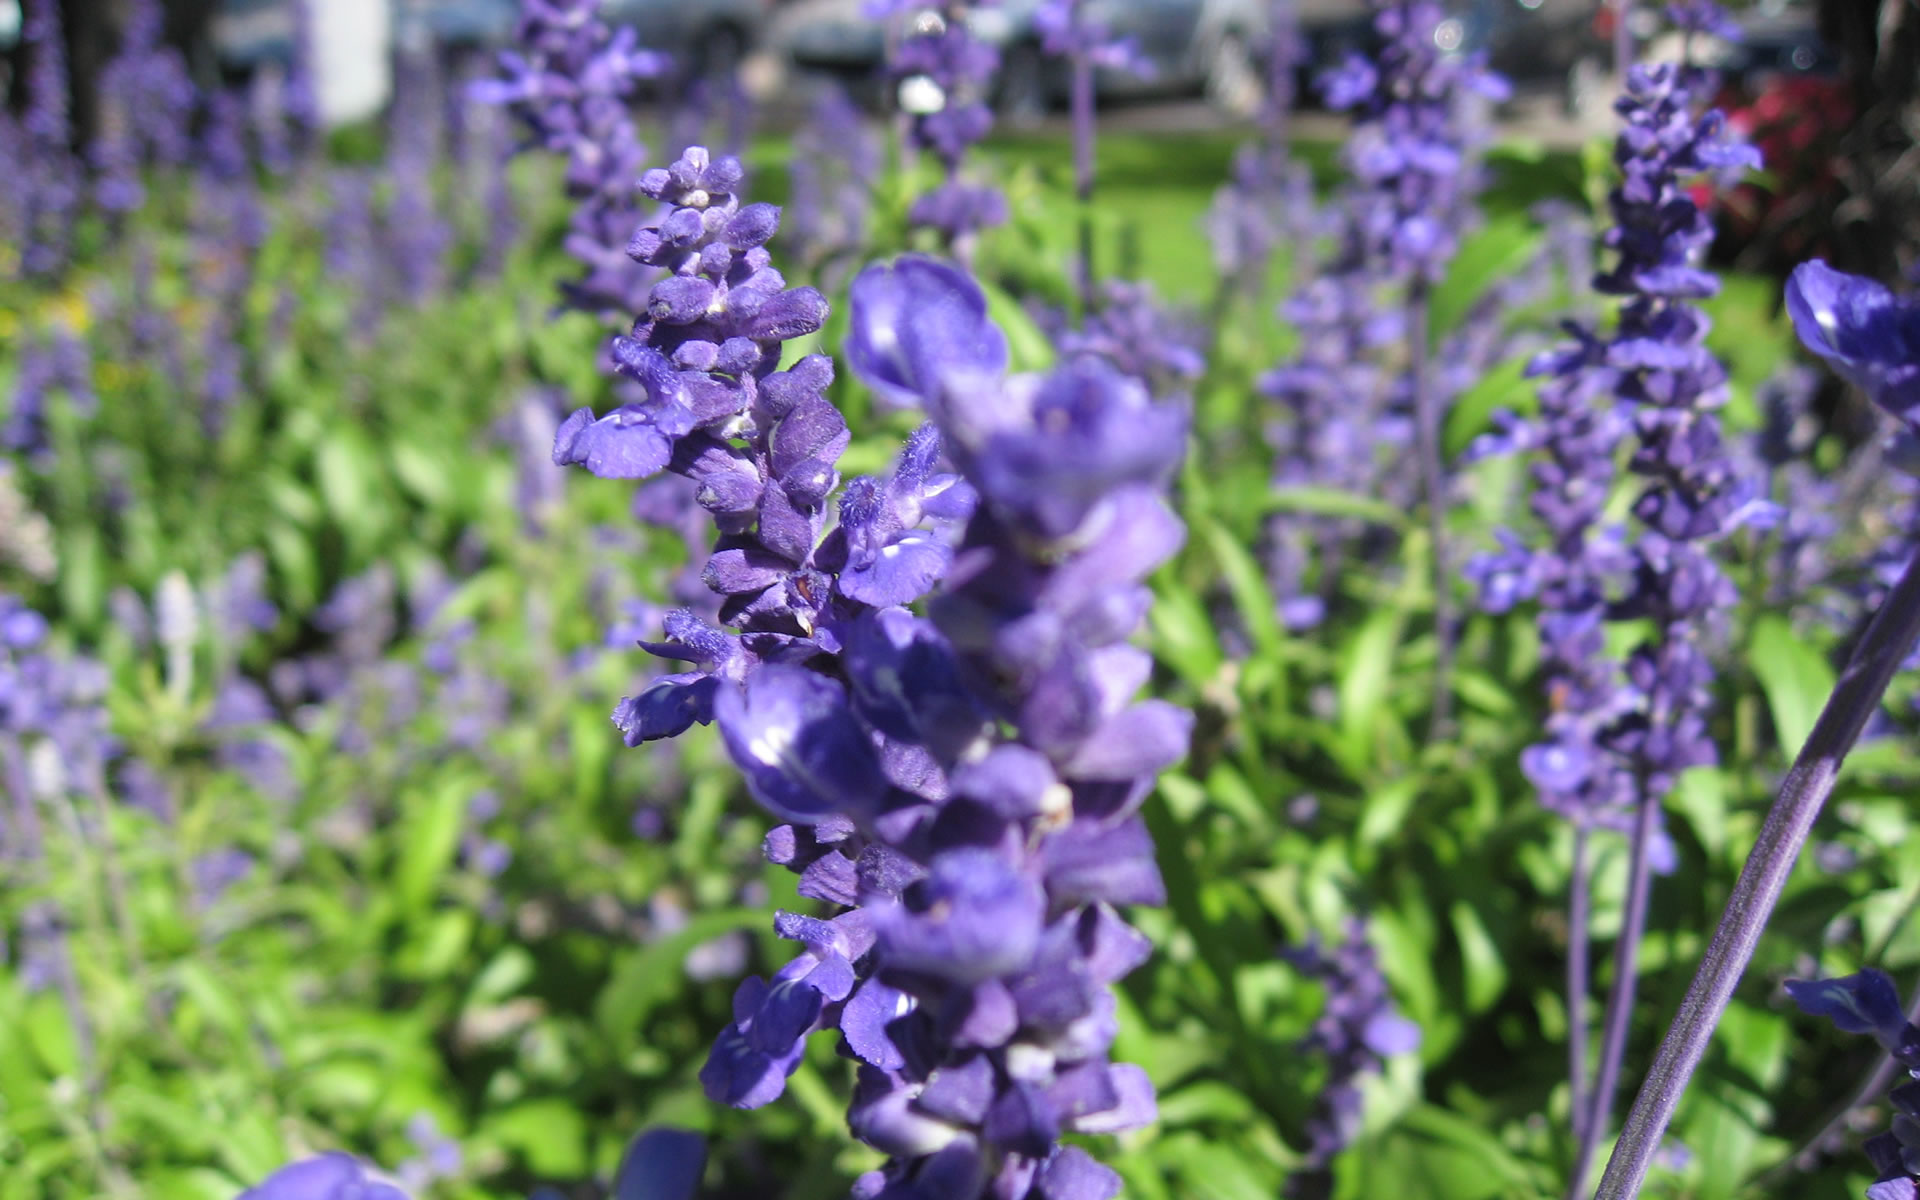 http://www.fabiovisentin.com/photography/photo/9/lavender-flower-wallpaper-wide-full-hd1255.jpg